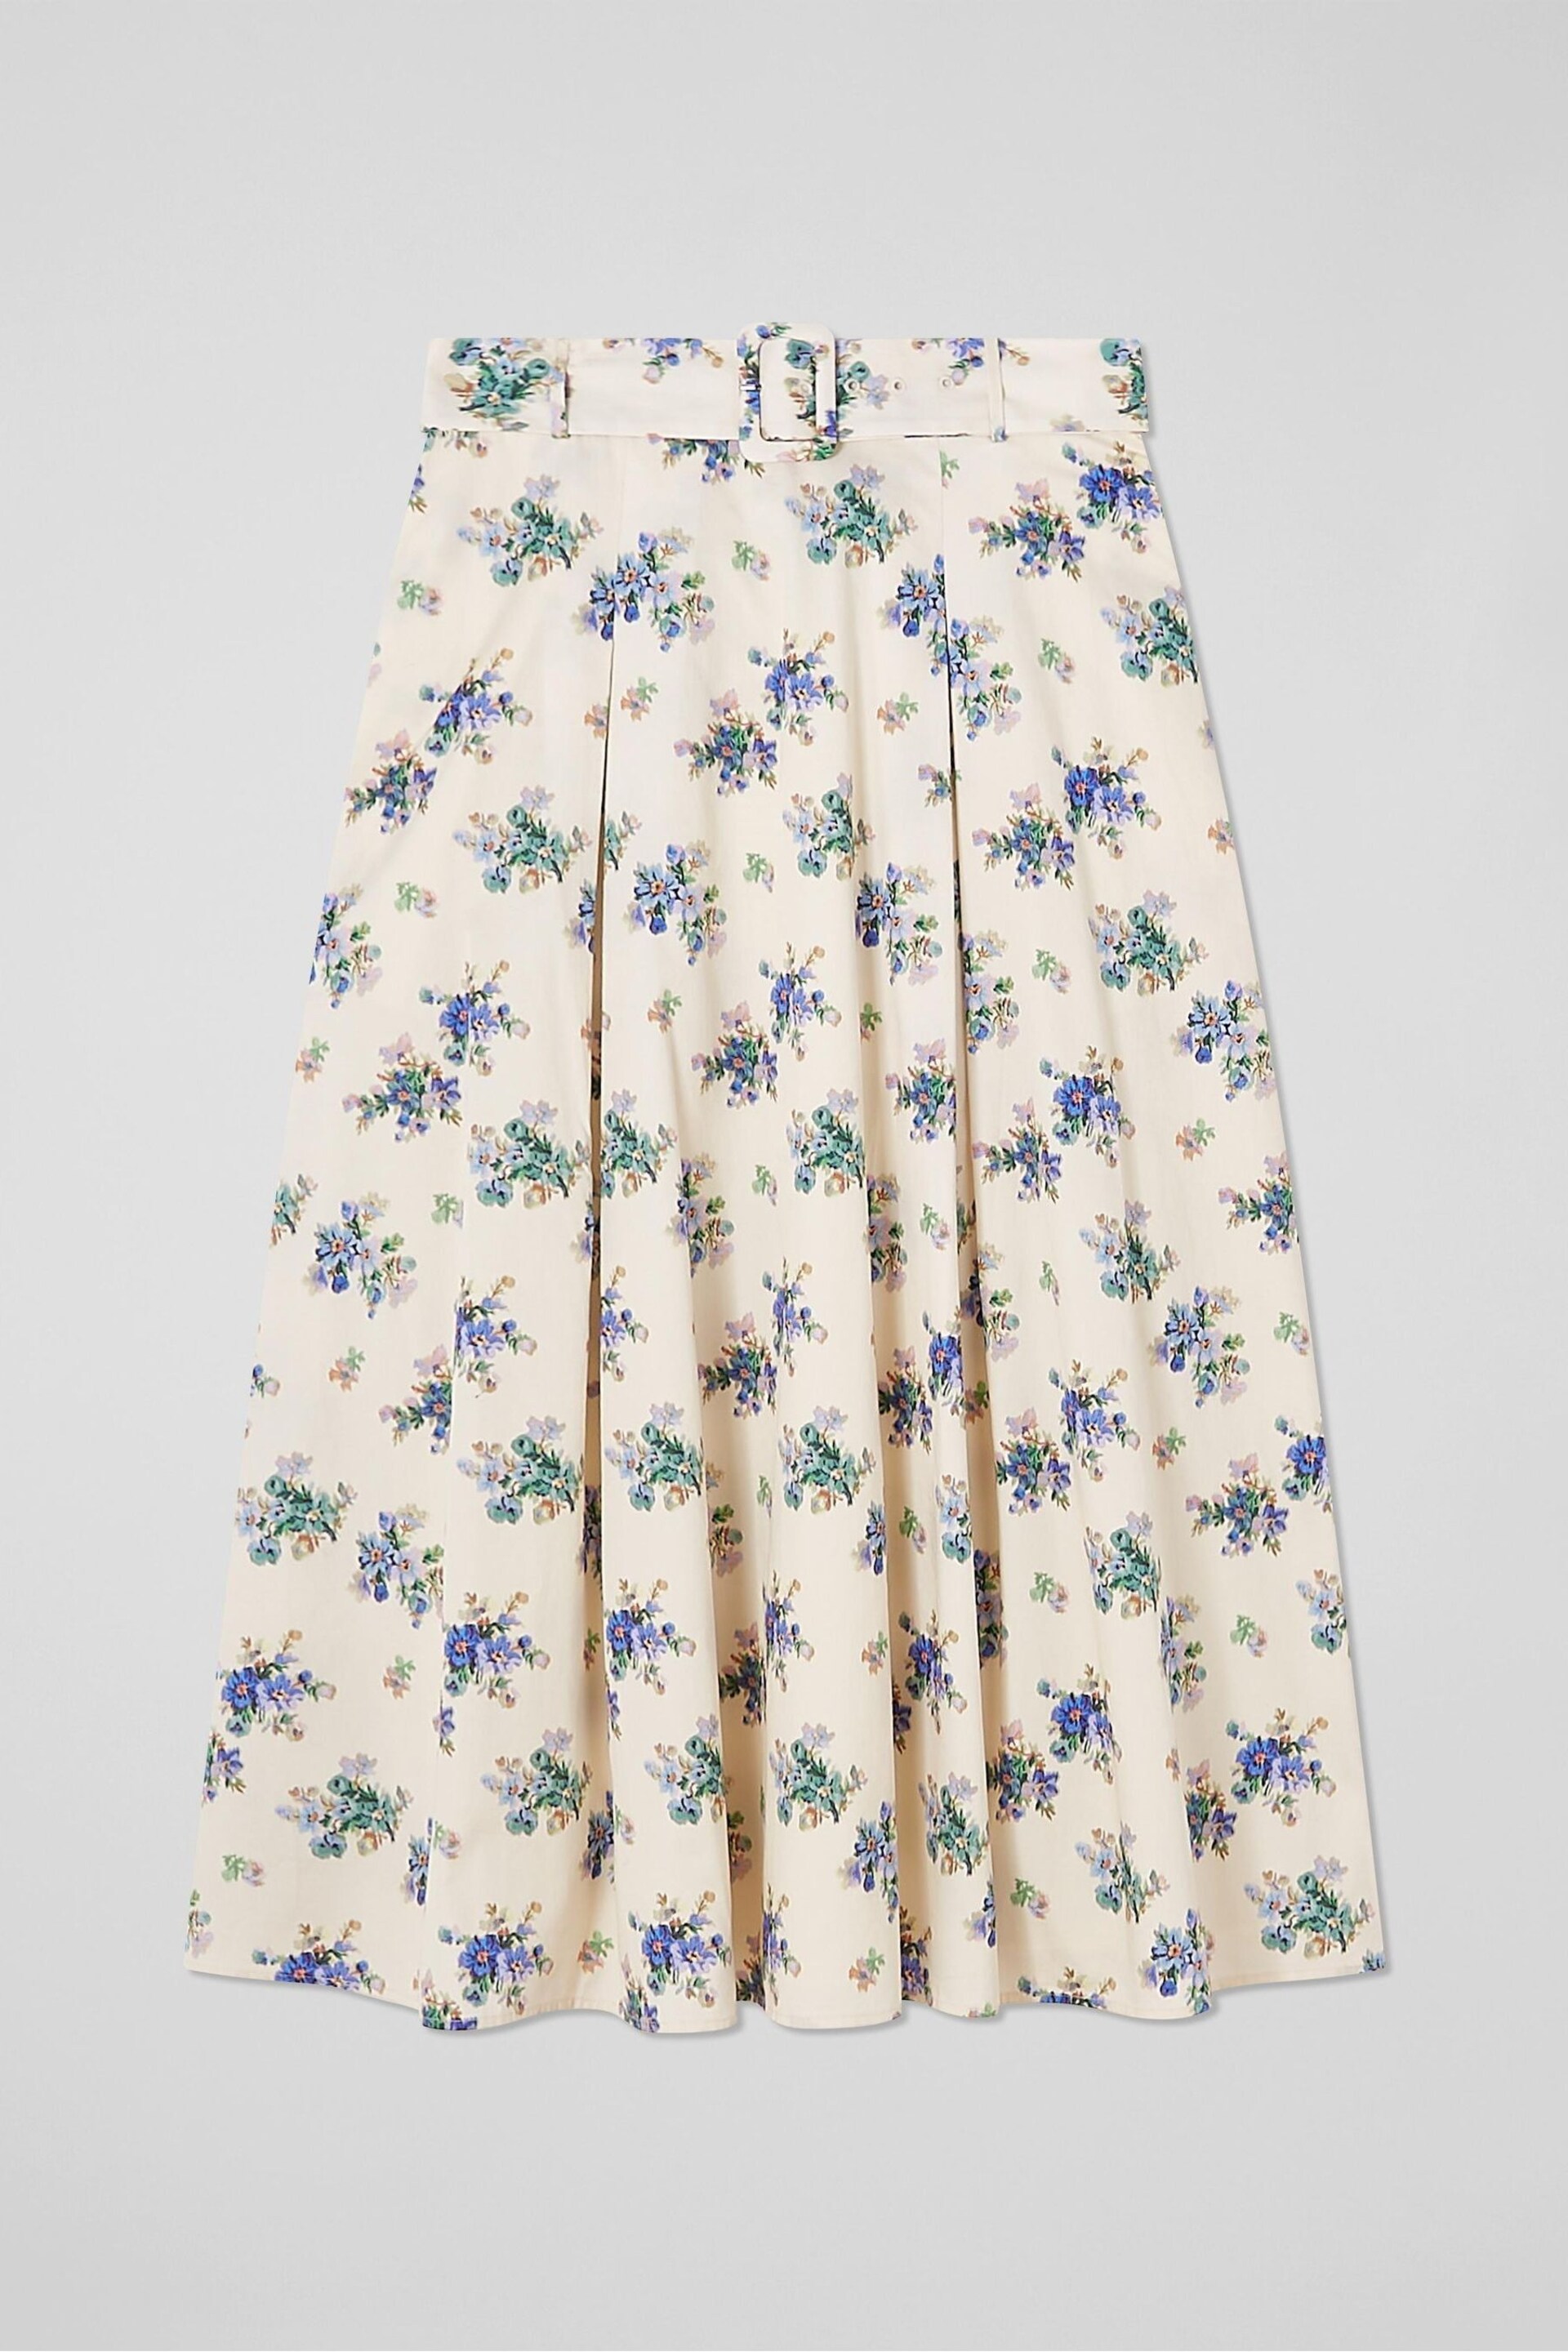 LK Bennett Elodie Bouquet Print Cotton Skirt - Image 3 of 3